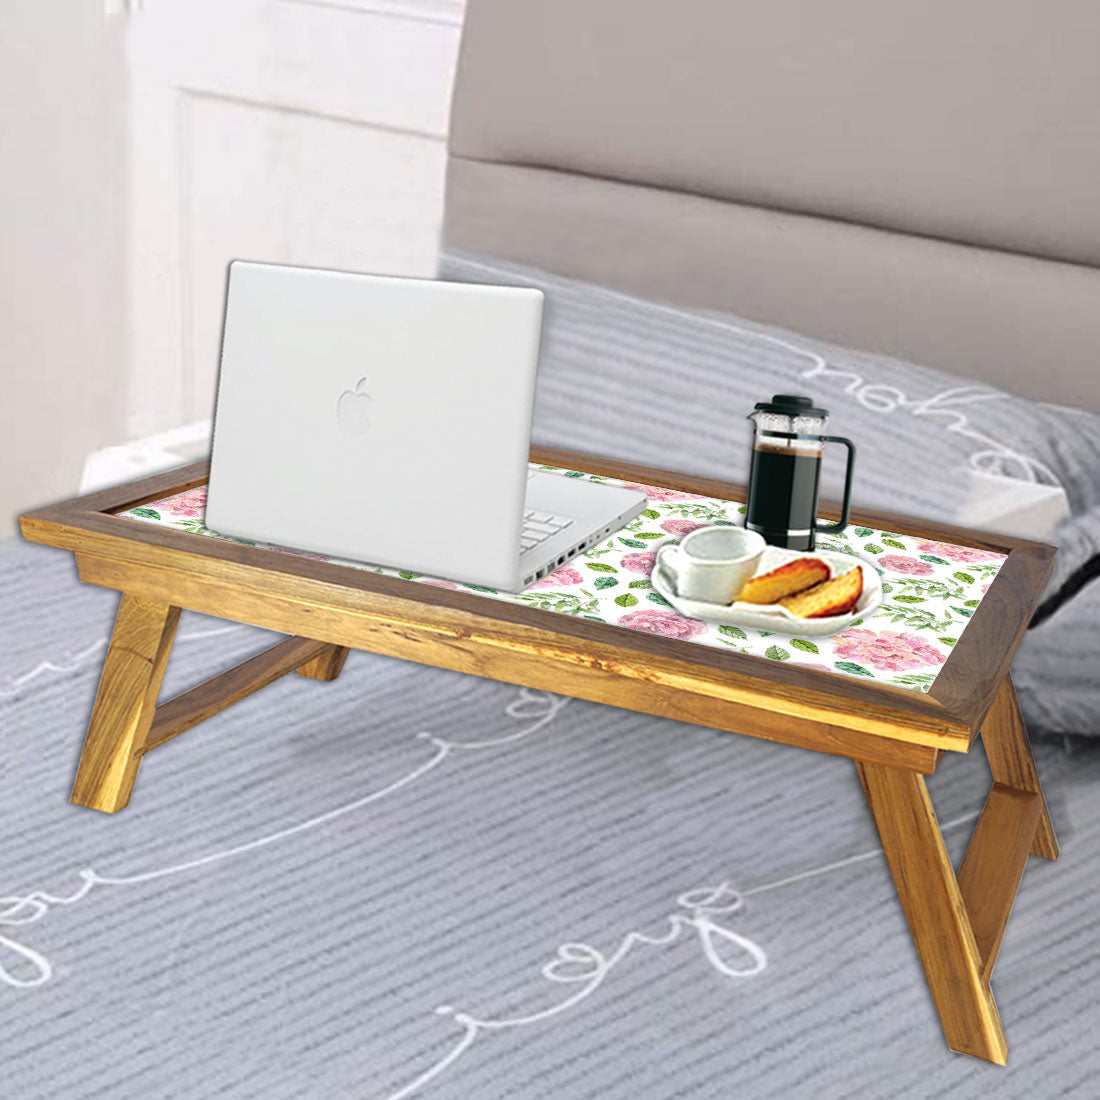 Designer Bed Breakfast Table Wooden & Tray for Home - Flower Pattern Nutcase